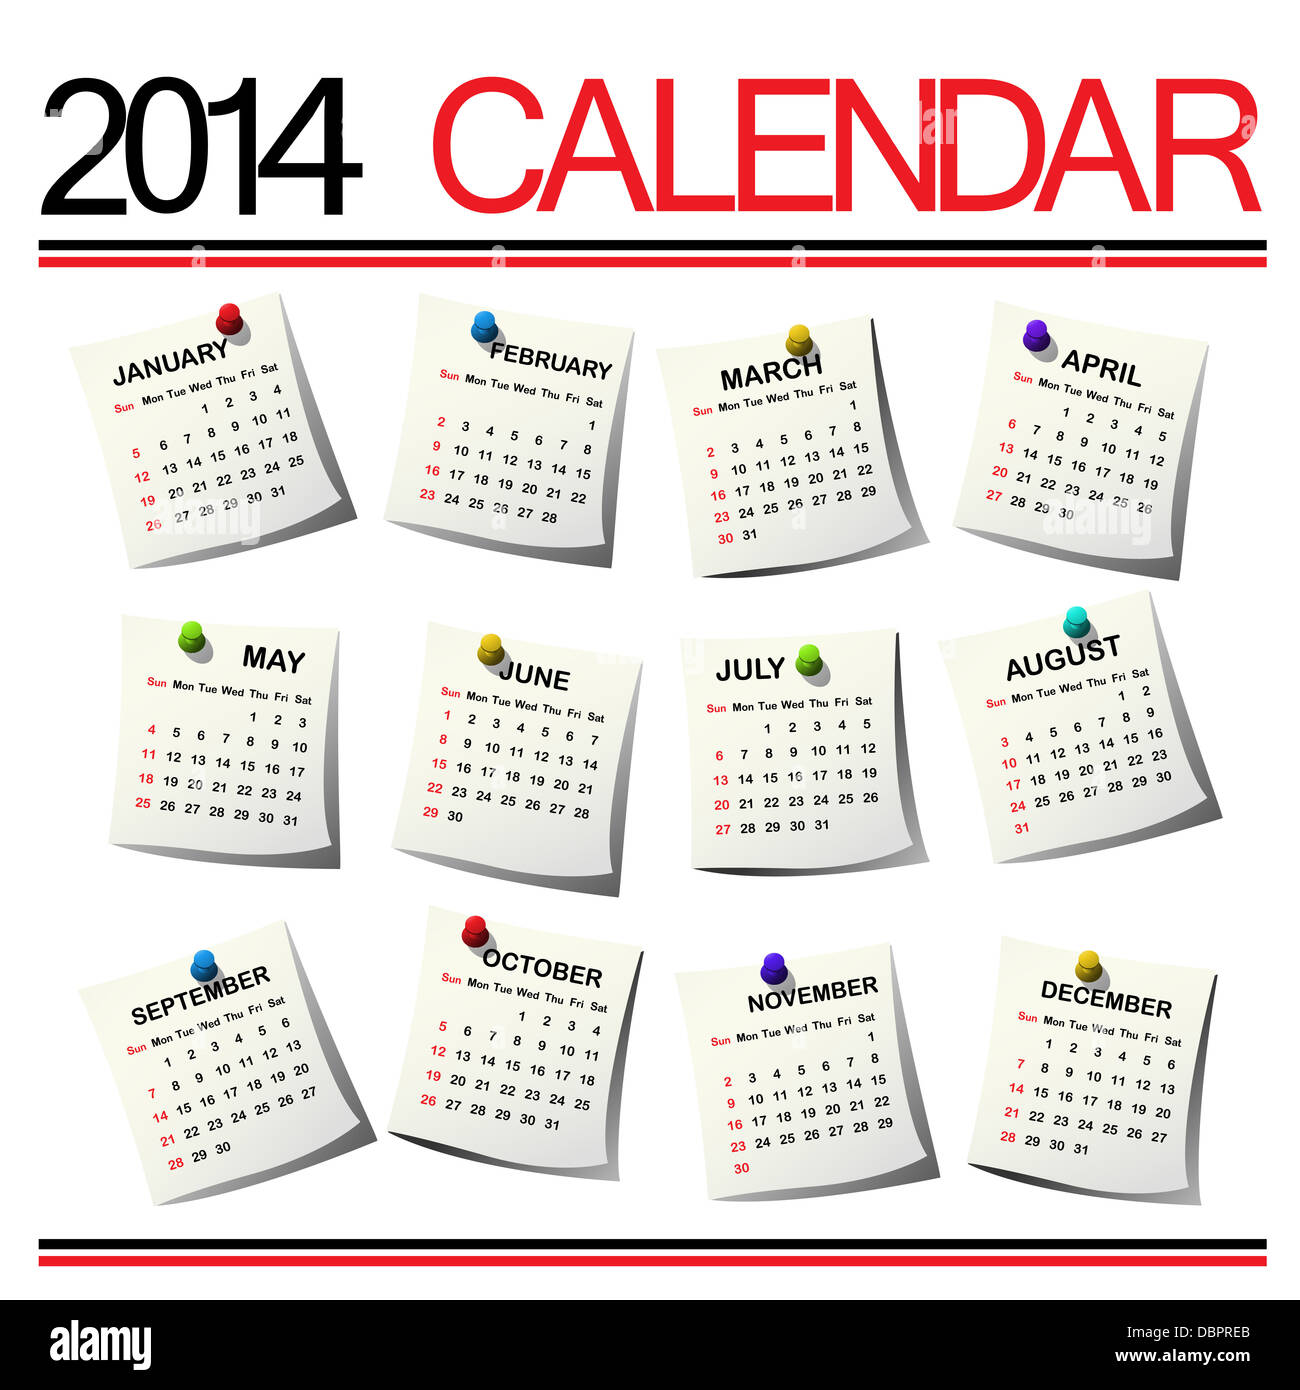 2014 Calendar against white background Stock Photo